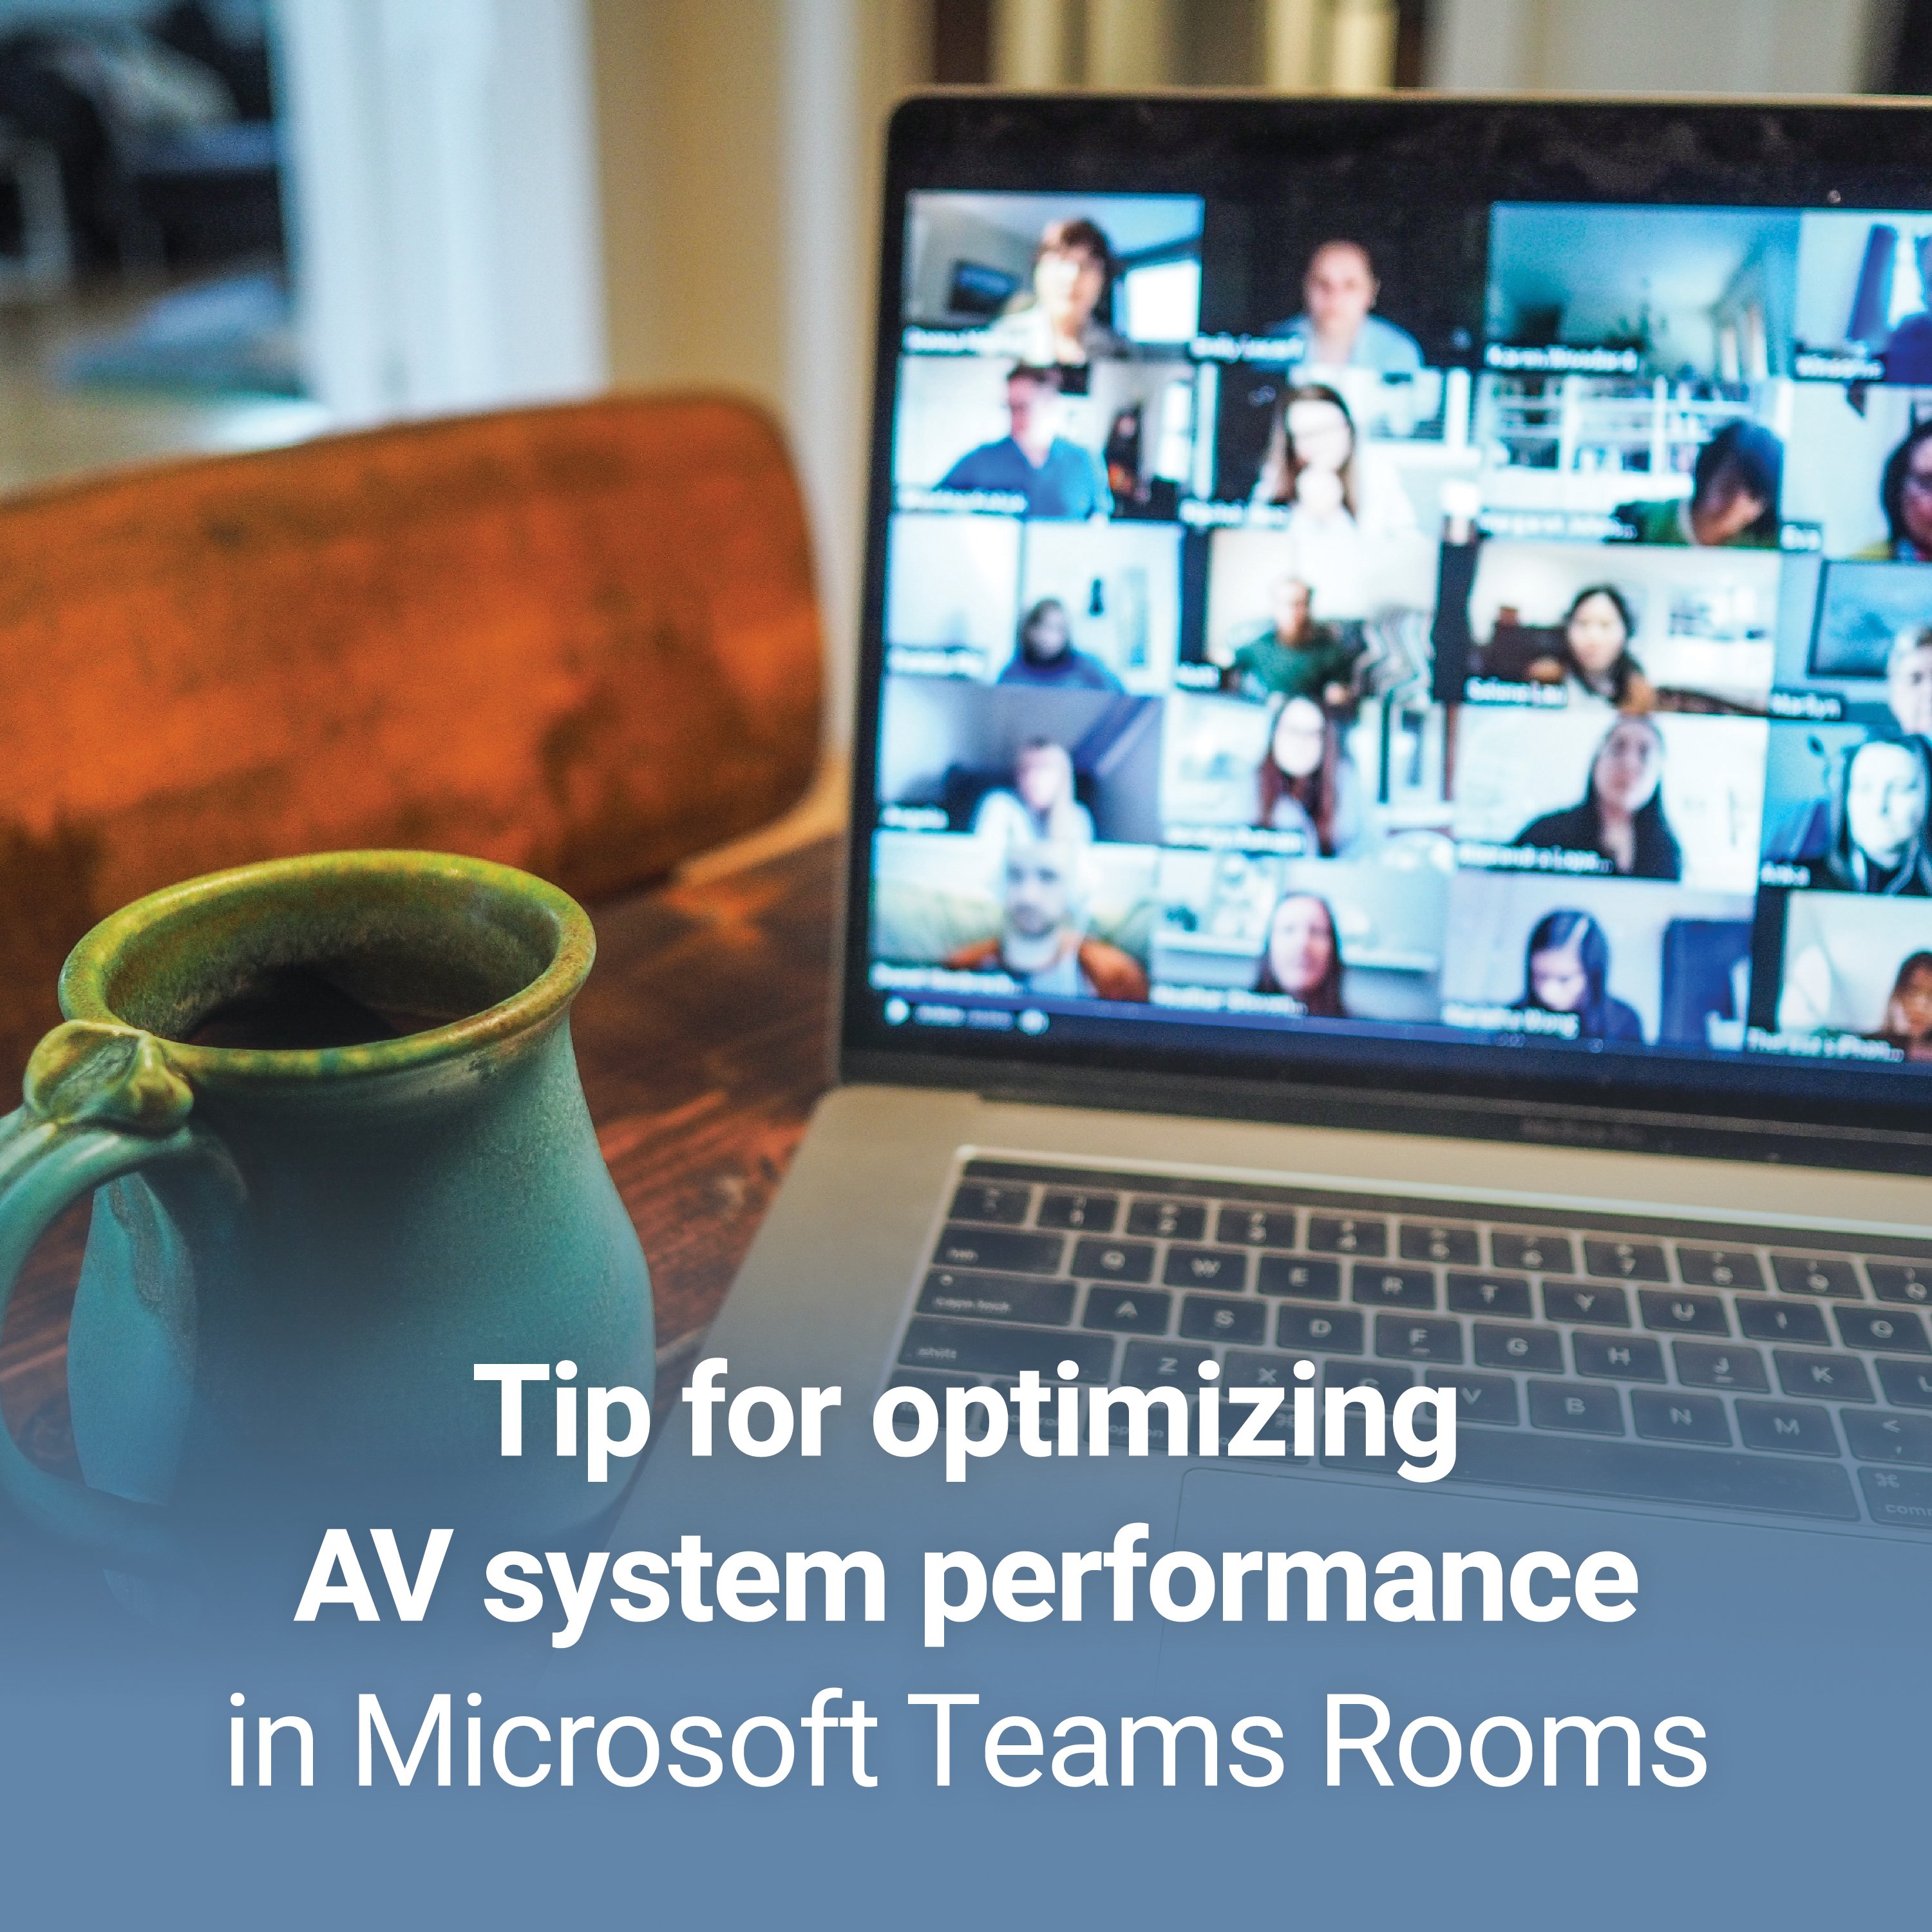 Tips for Optimizing AV System Performance in Microsoft Teams Rooms